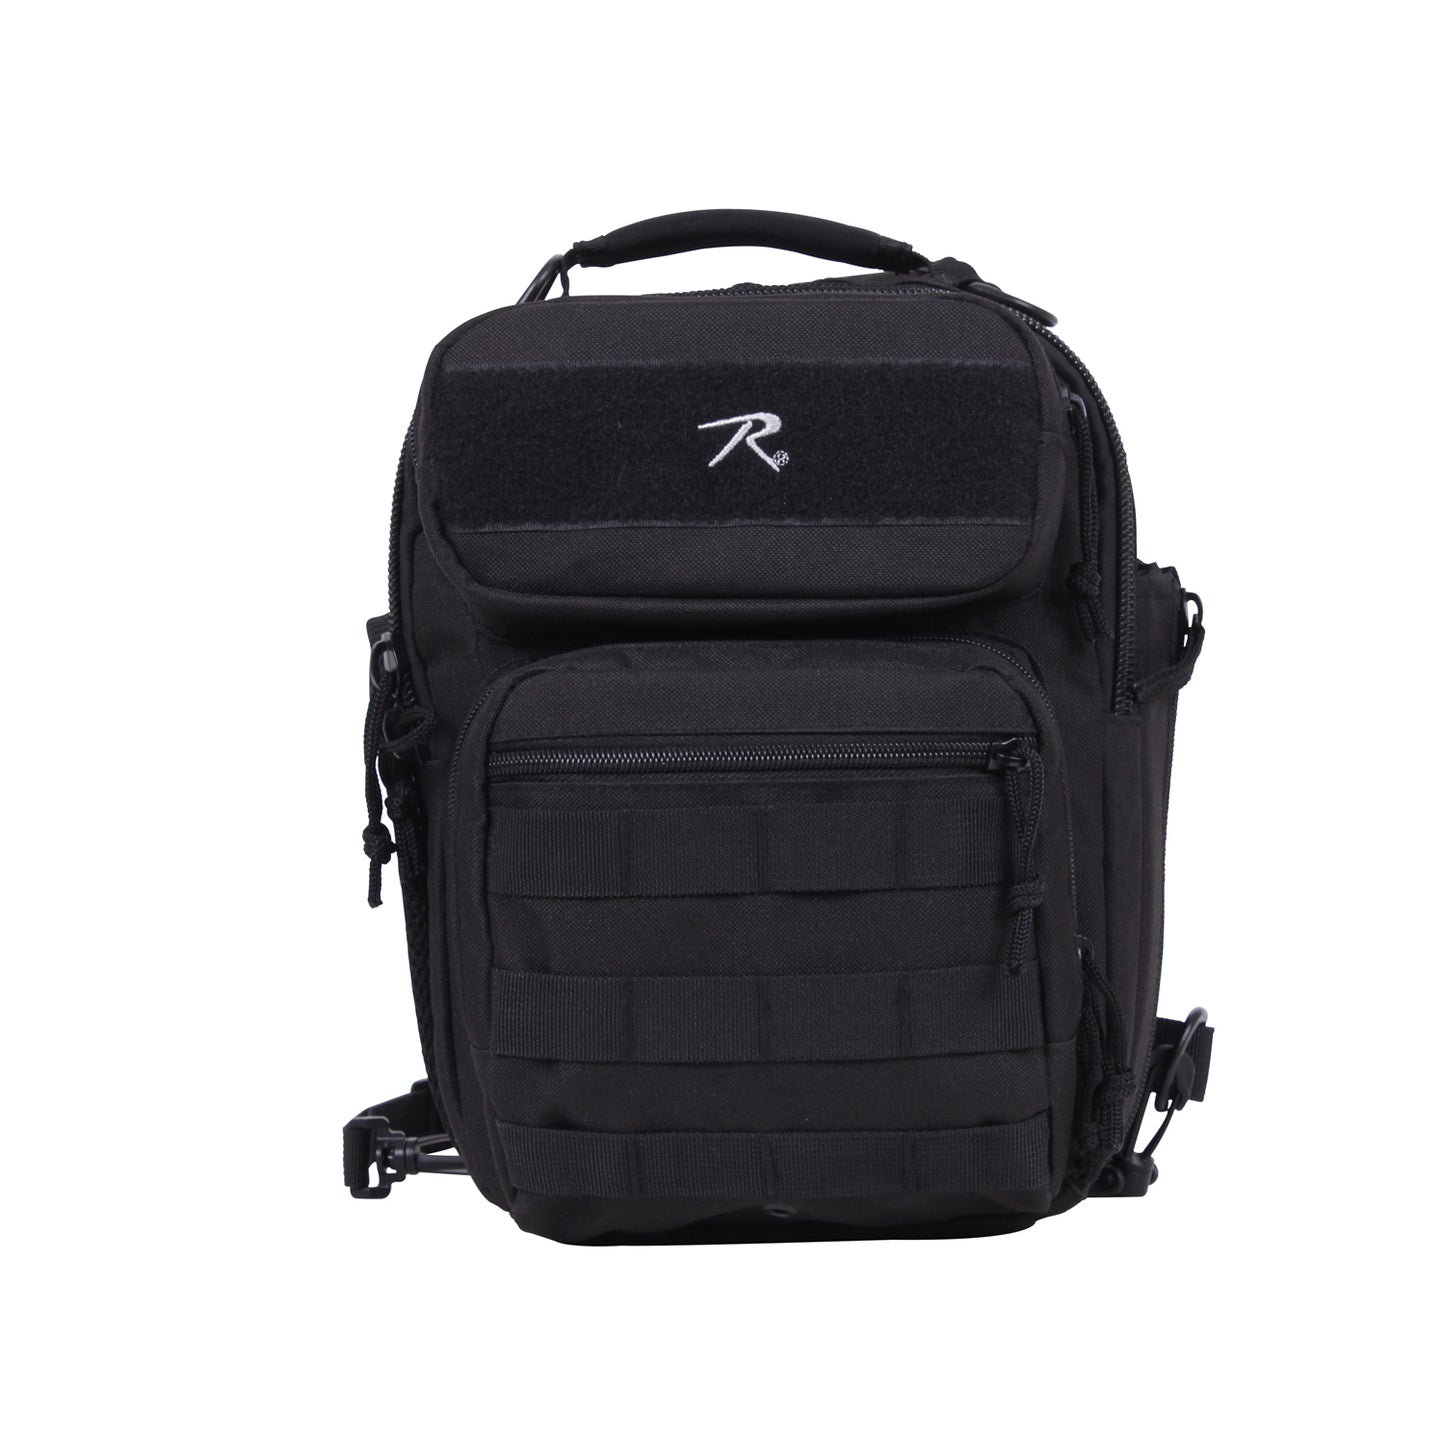 Black or Coyote Brown Compact Tactisling Shoulder Bag Travel Duffle Hiking Bag